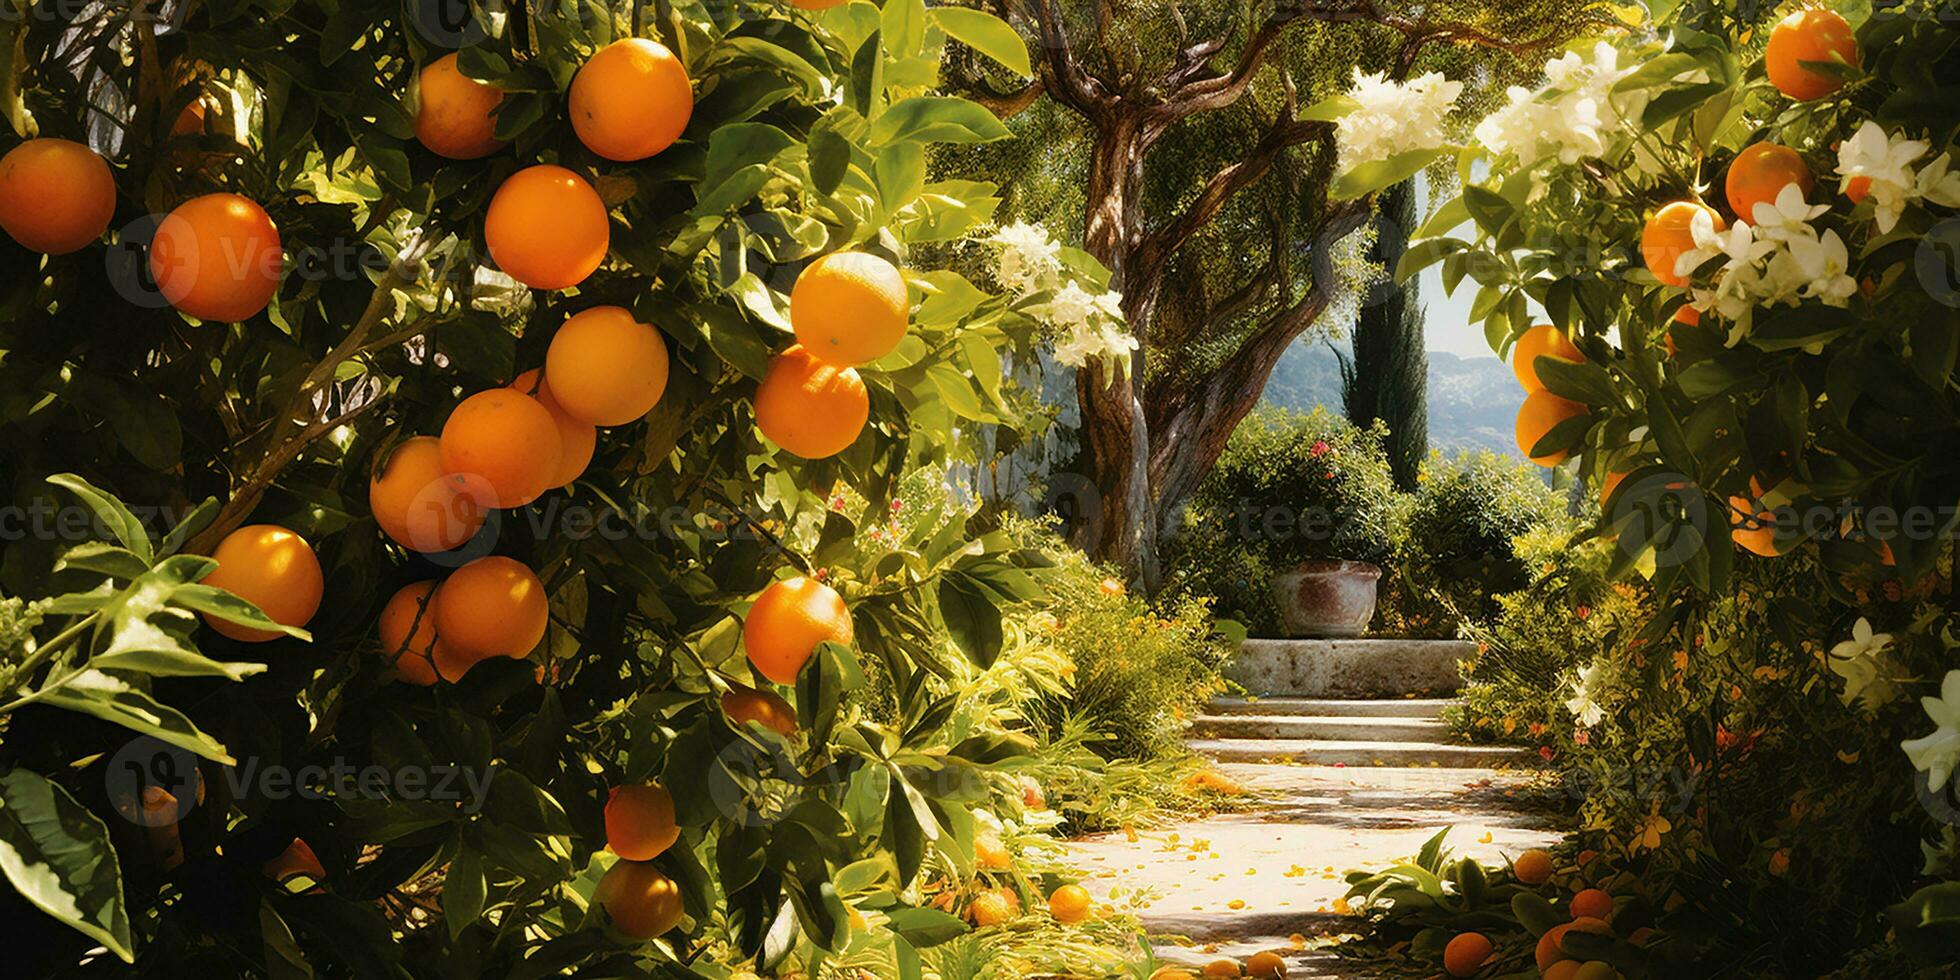 ai generado hermosa jardín con naranja arboles maduro frutas cosecha temporada naranjas, mandarinas, pomelos foto